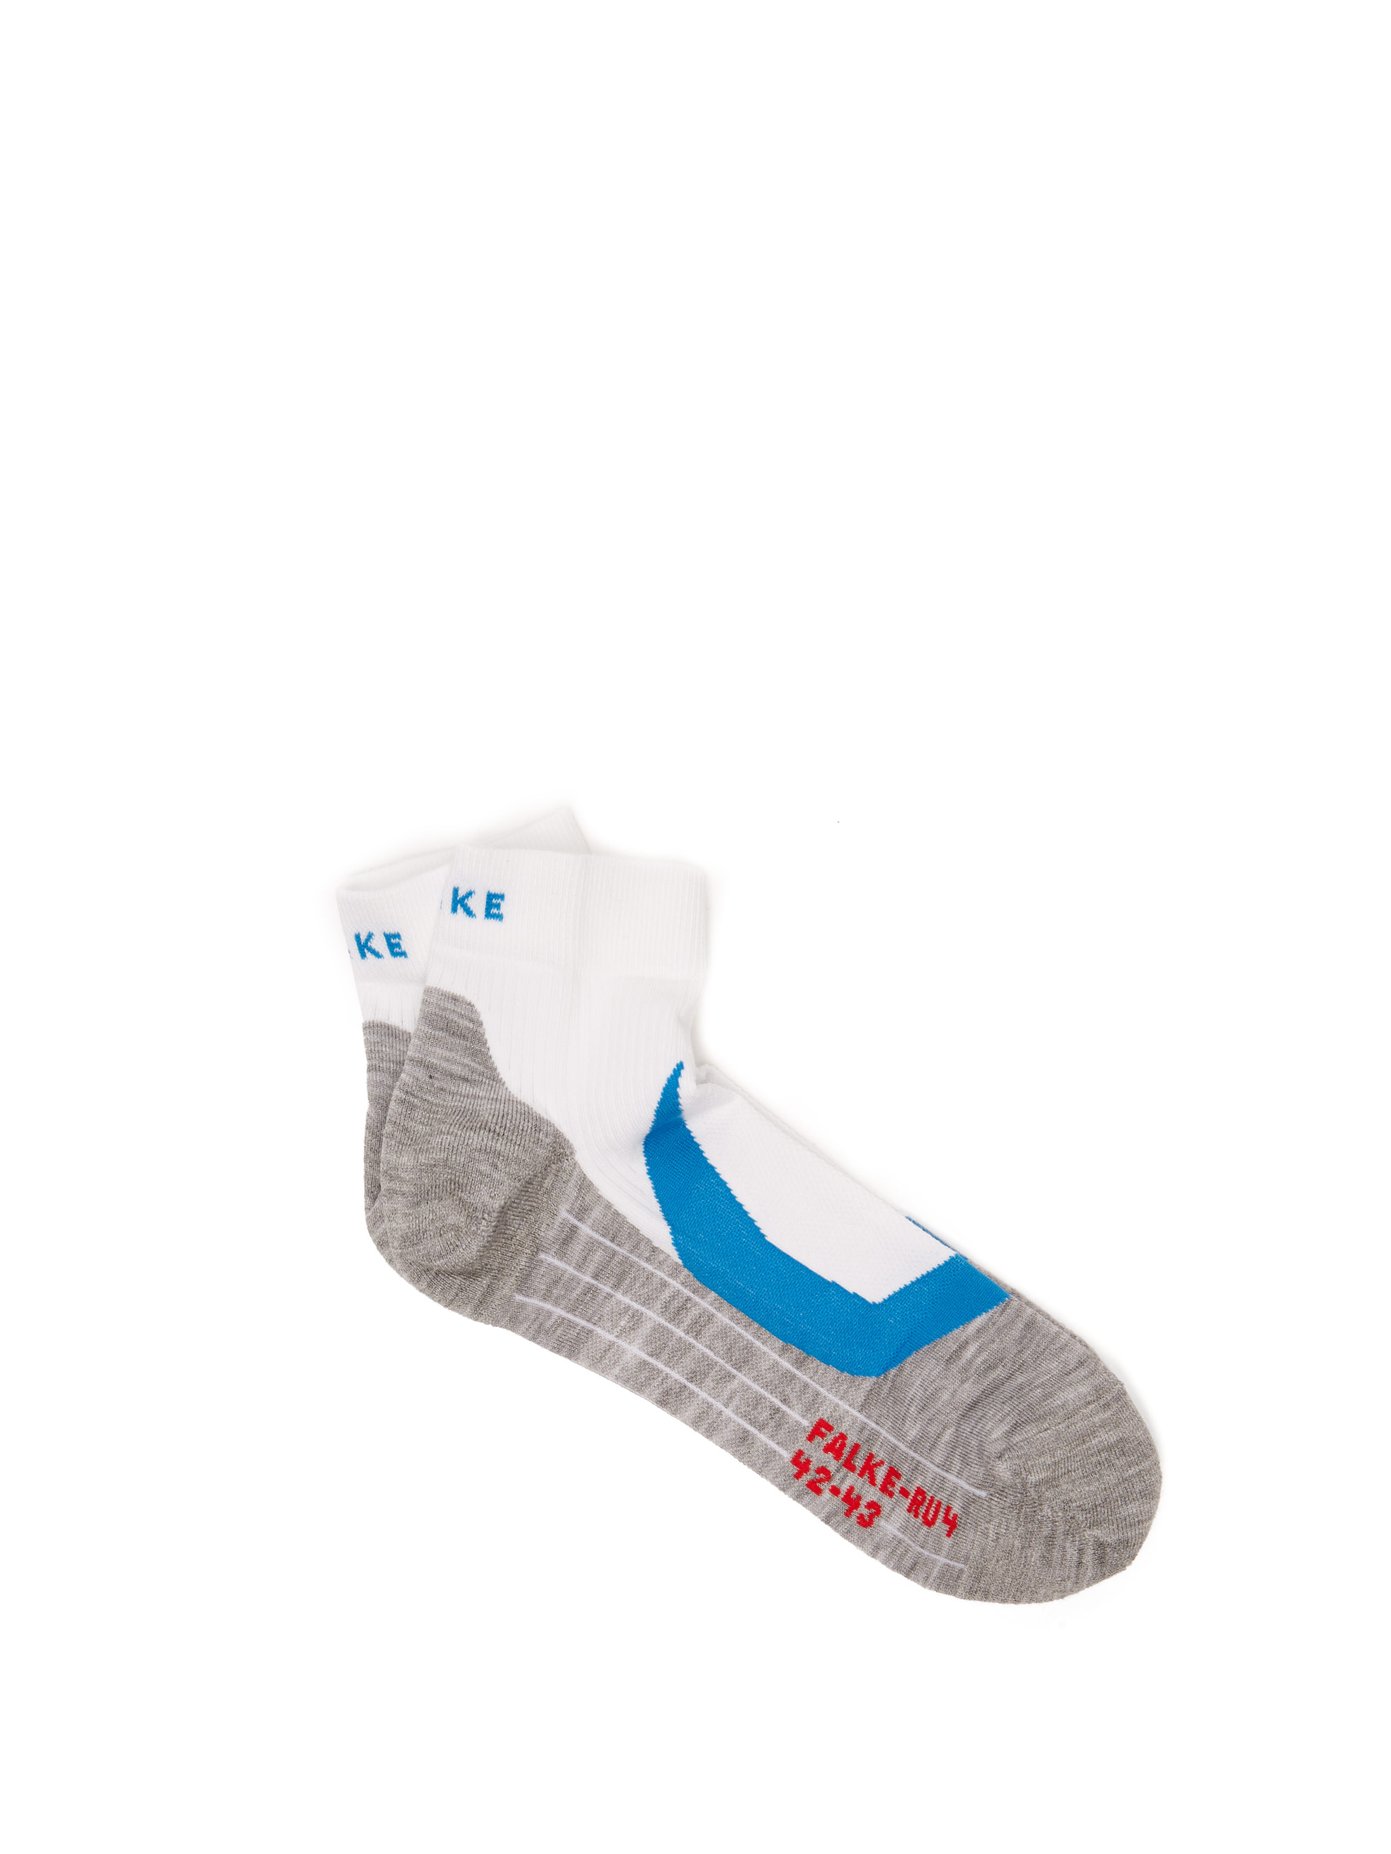 RU 4 Cool running socks | Falke Ess 